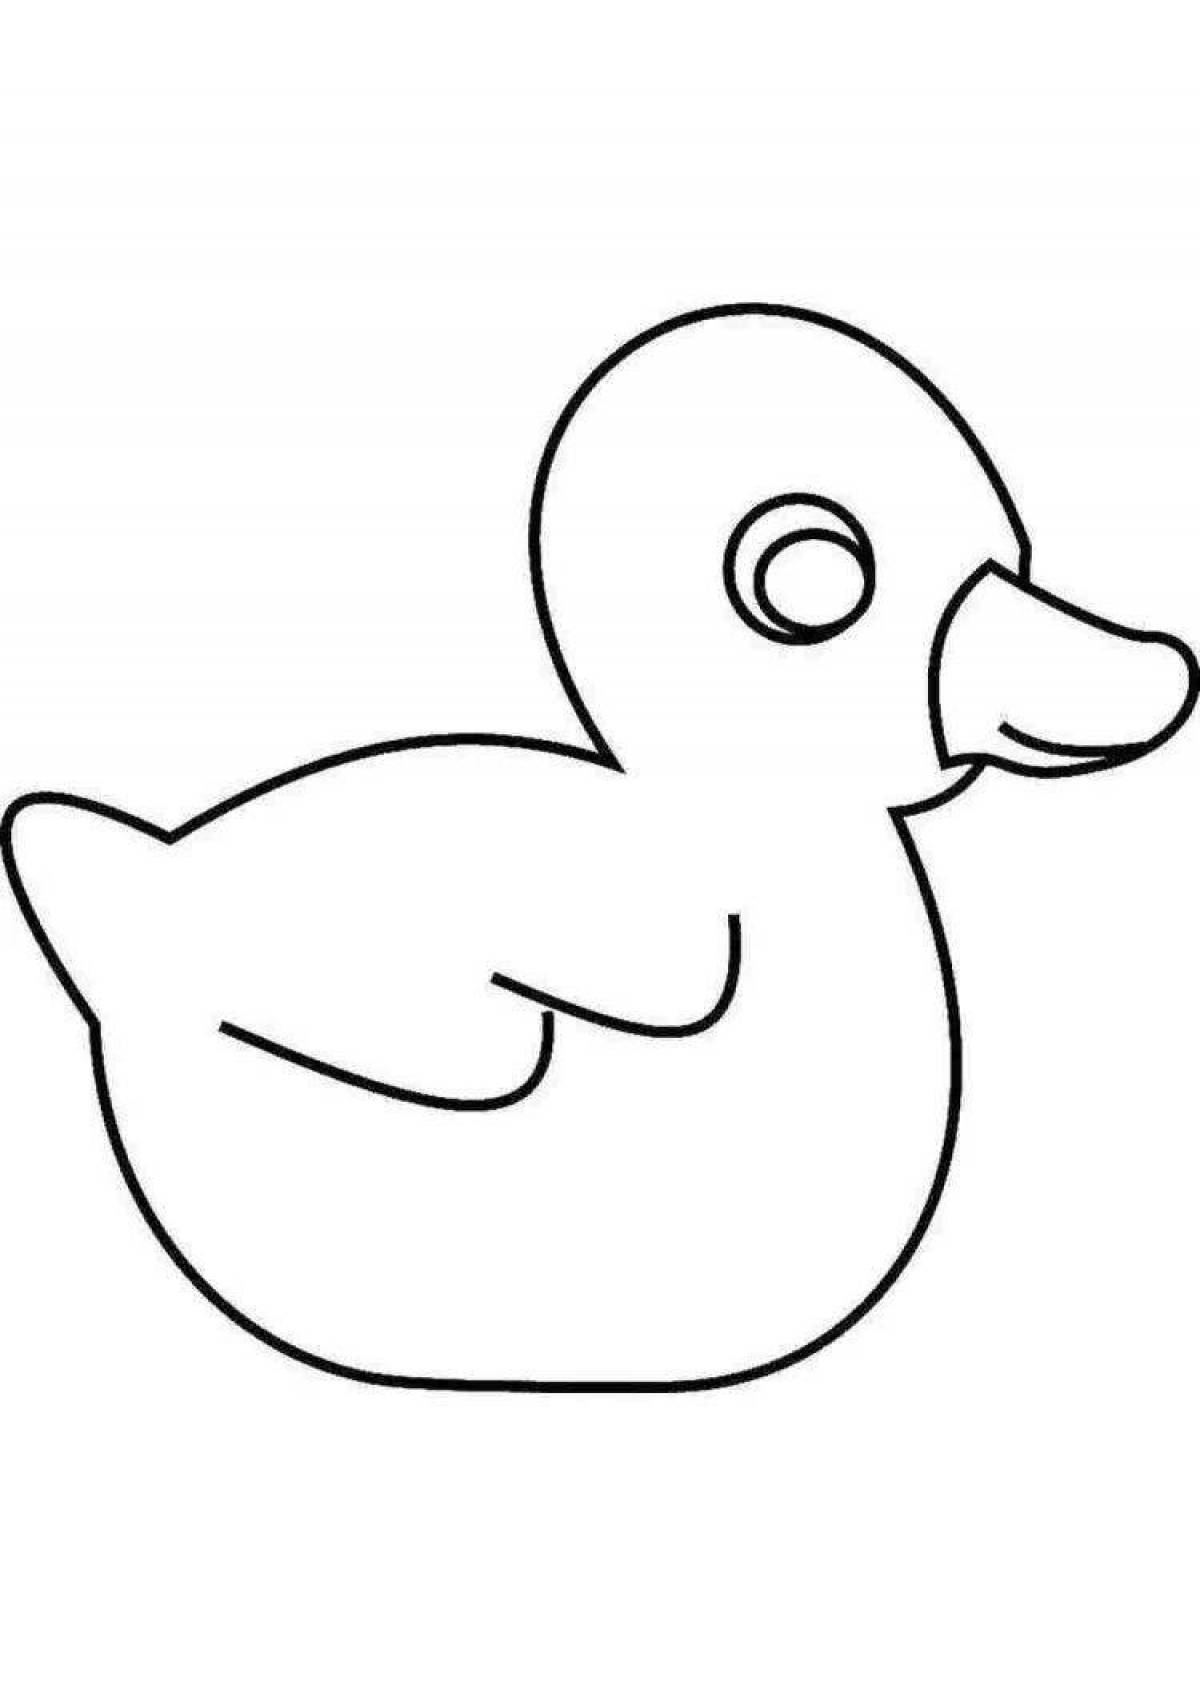 Coloring page bubble rubber duck